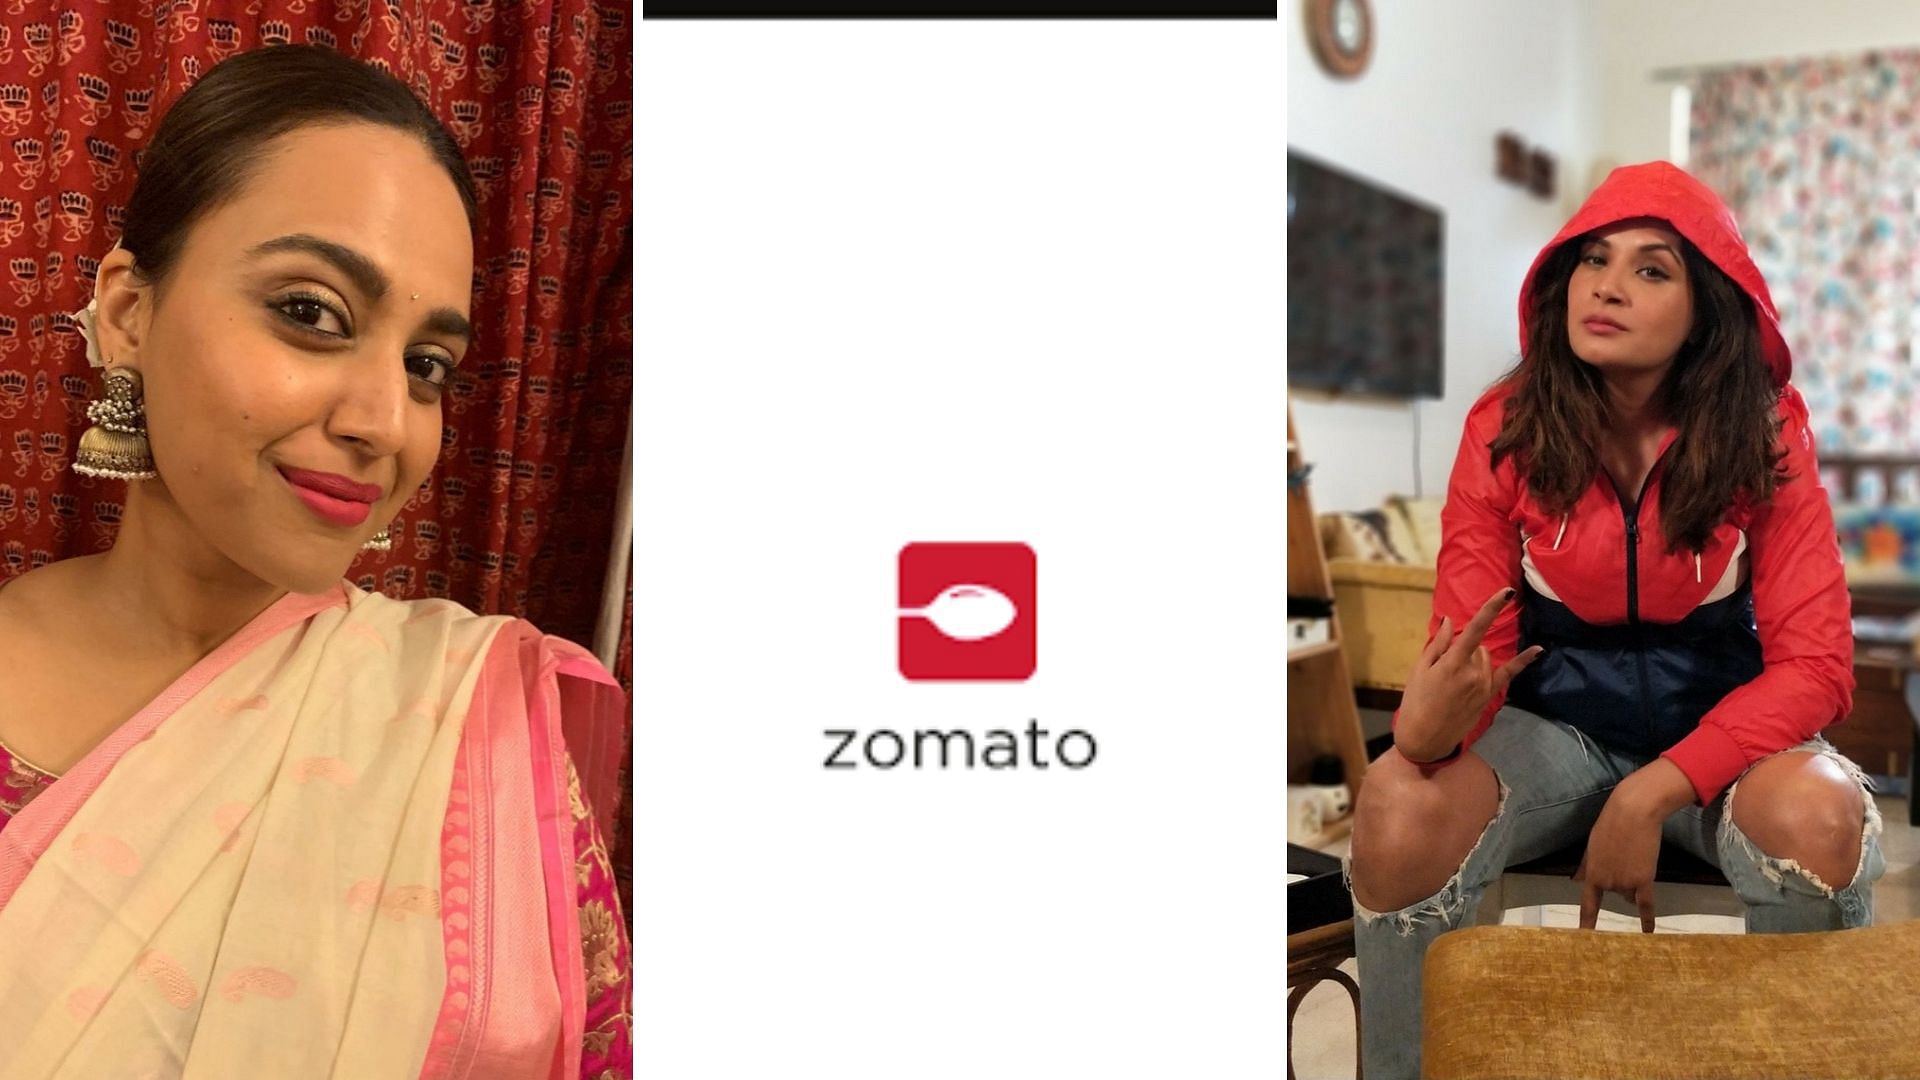 Swara and Richa praised Zomato on Twitter.